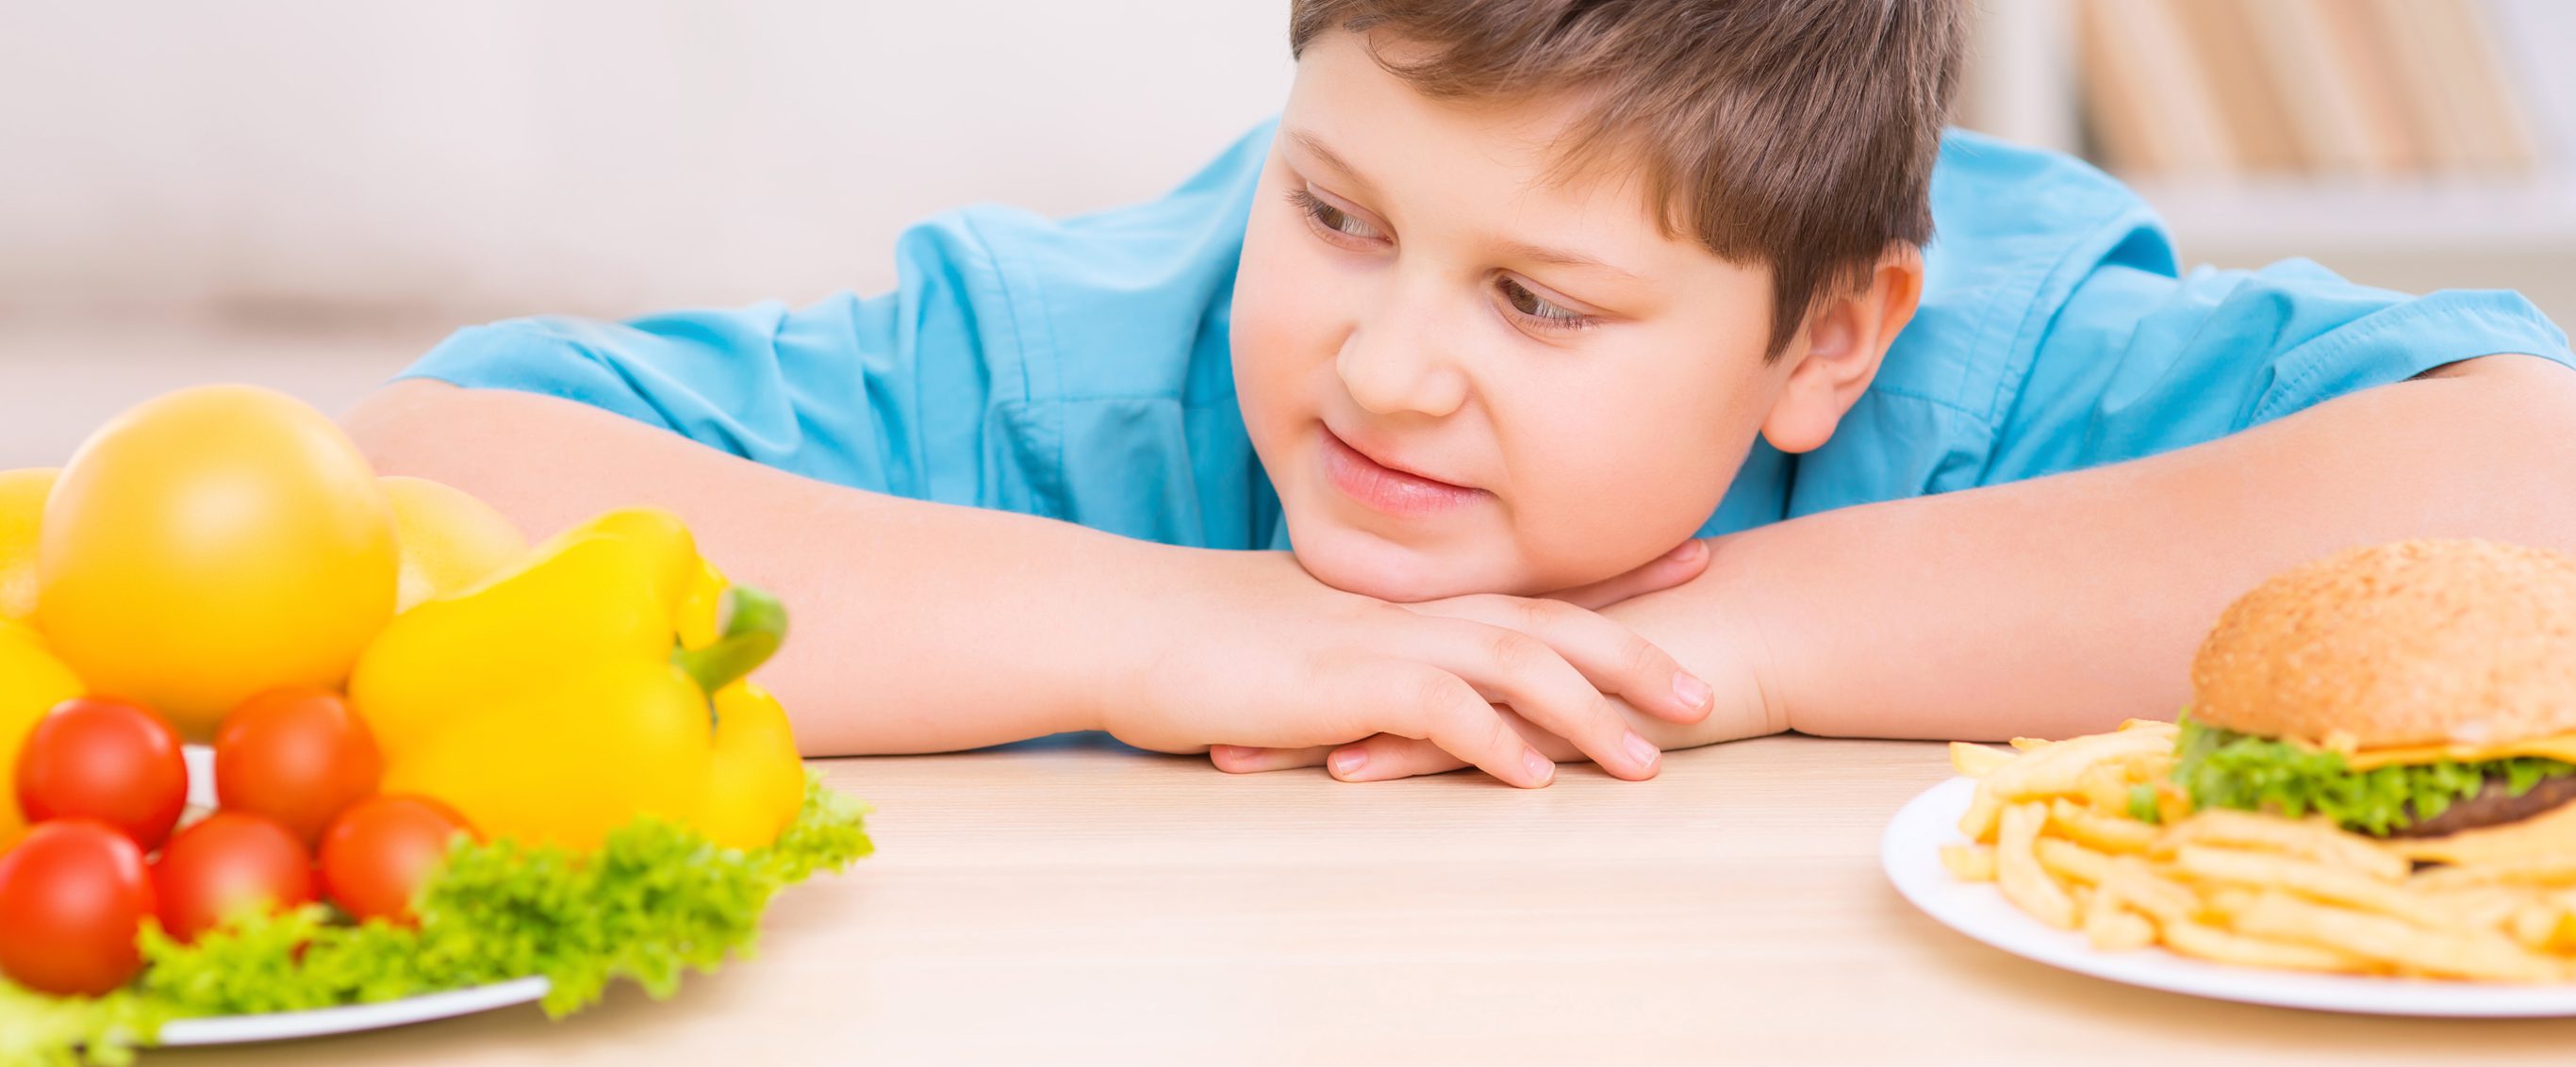 Boy deciding between health food and junk food